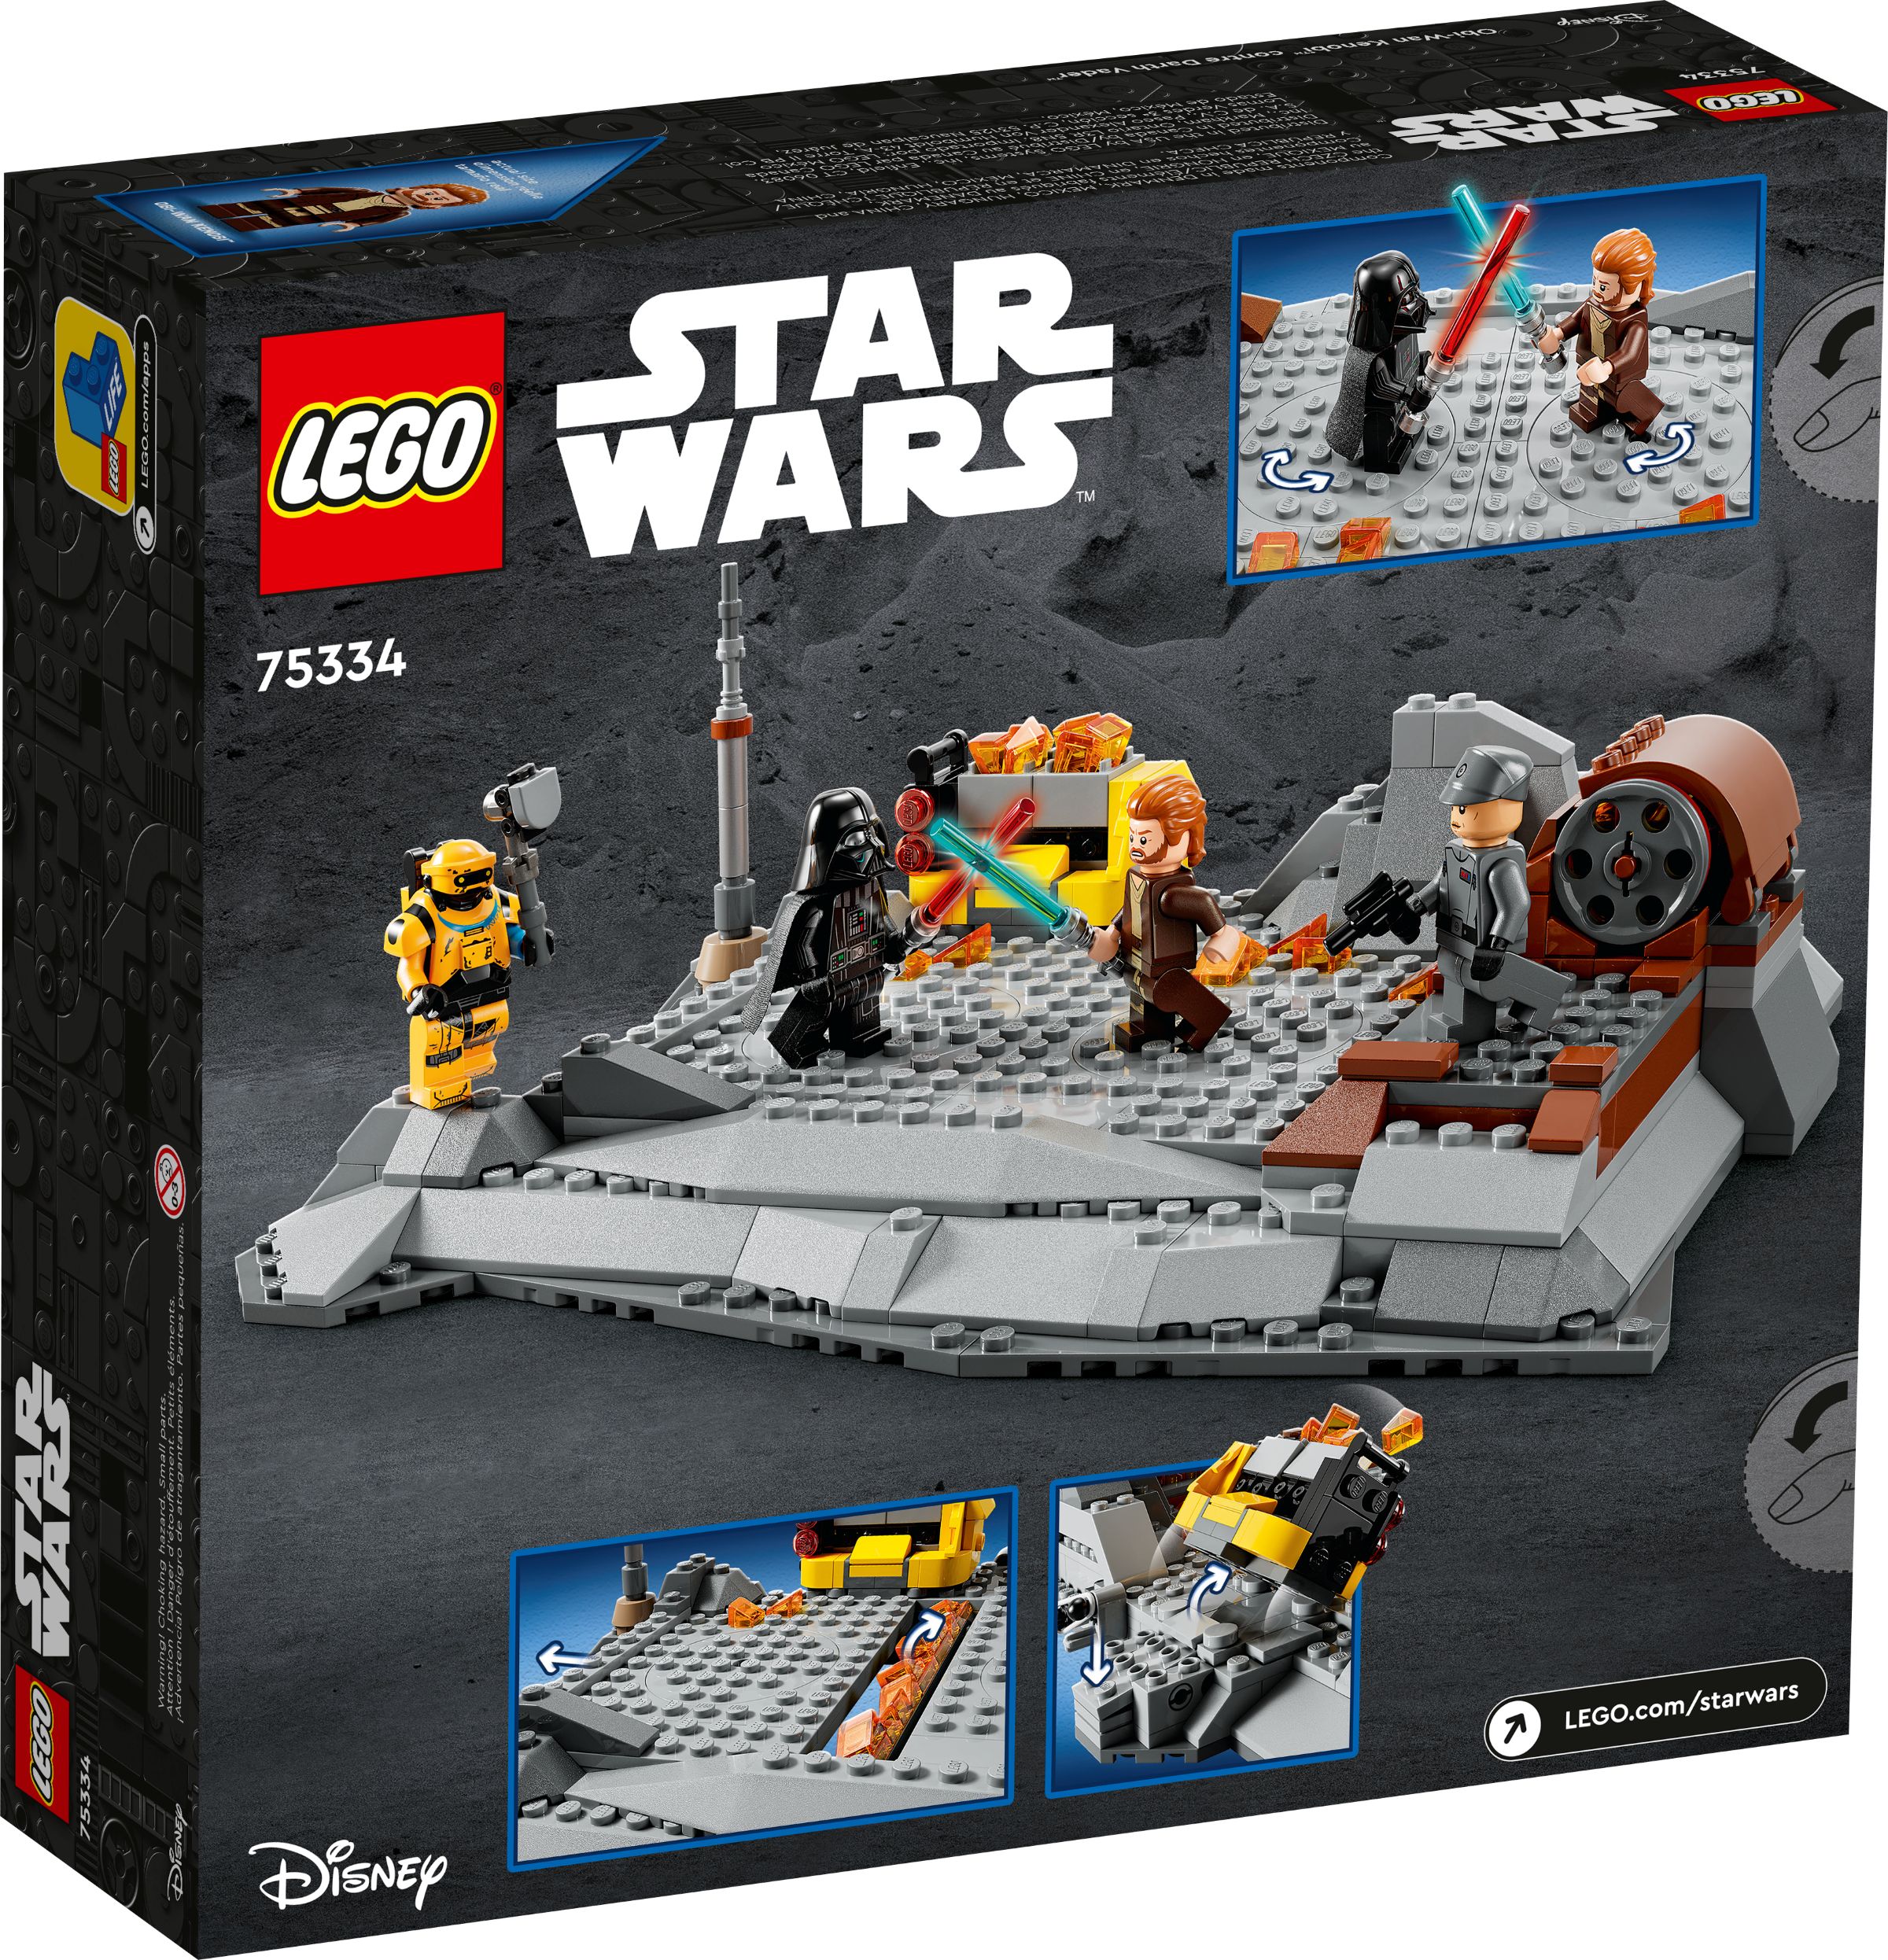 LEGO Star Wars 75334 Obi-Wan Kenobi™ vs. Darth Vader™ LEGO_75334_alt6.jpg